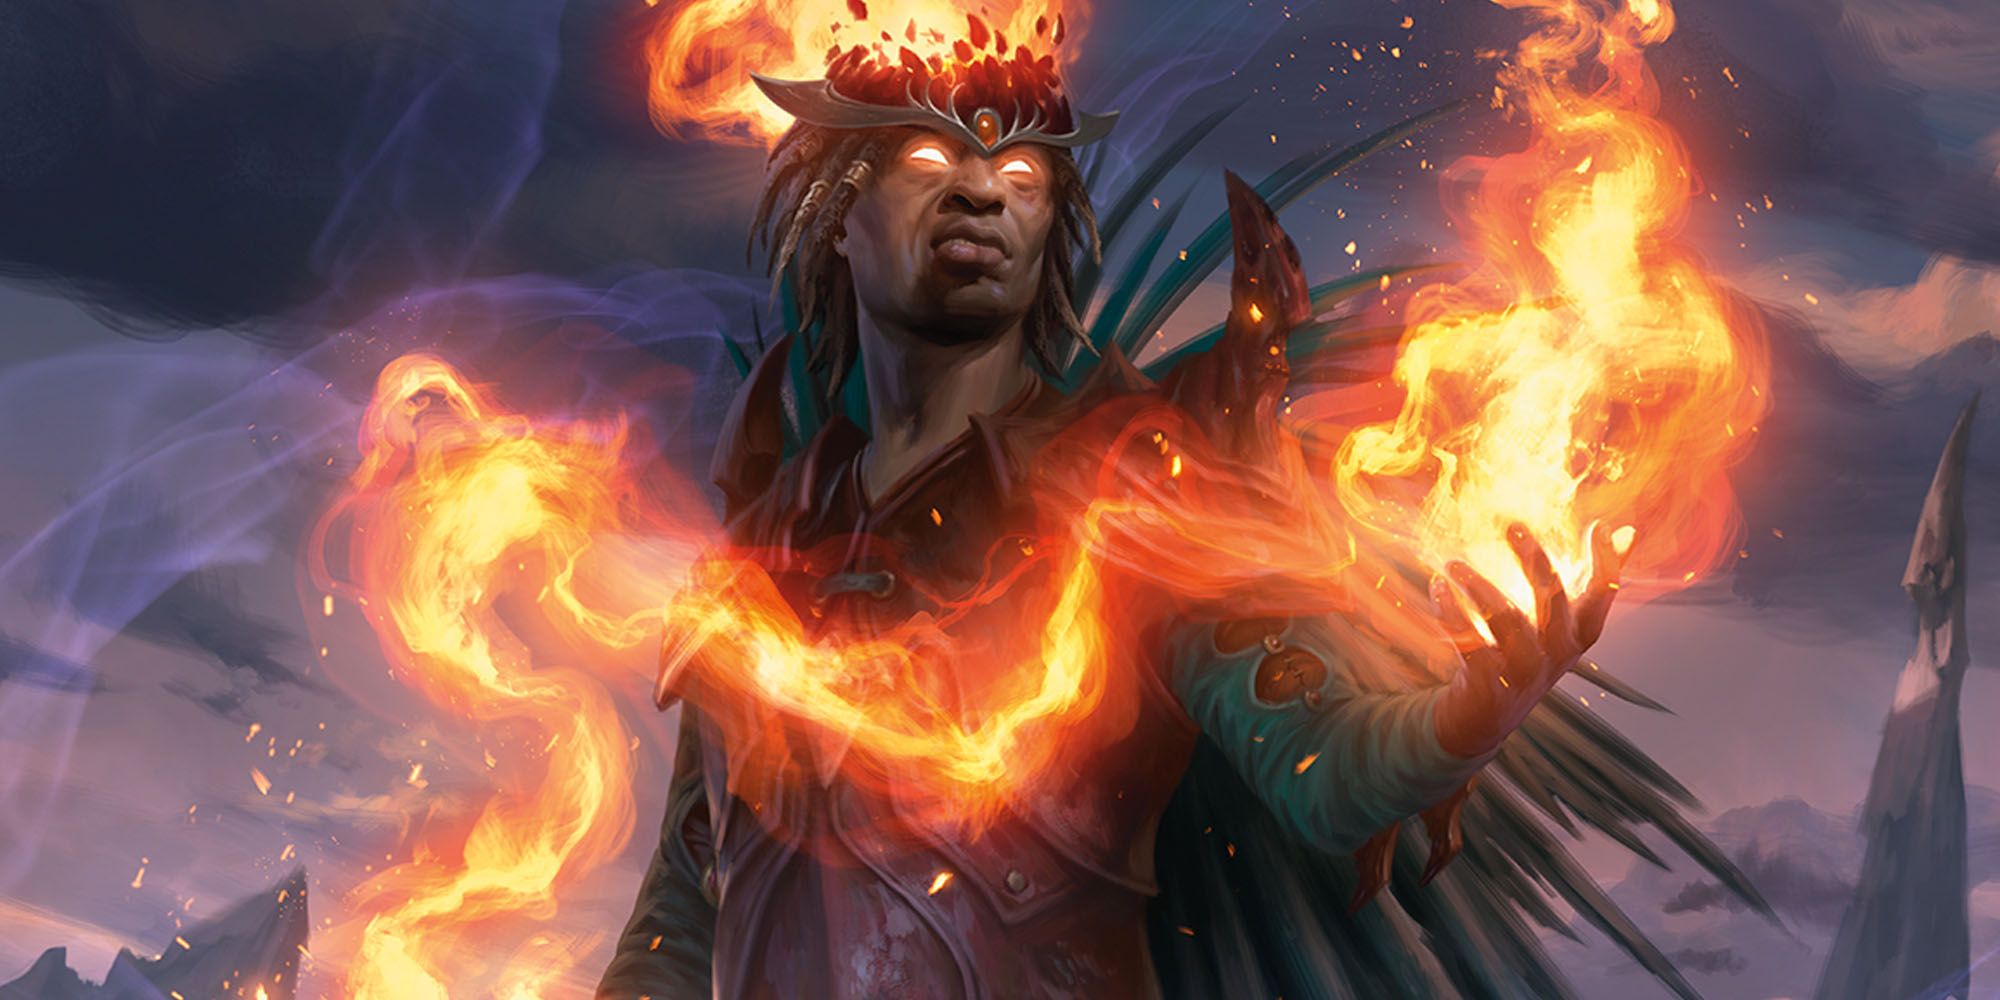 A multiclassed sorcerer warlock conjuring fire magic